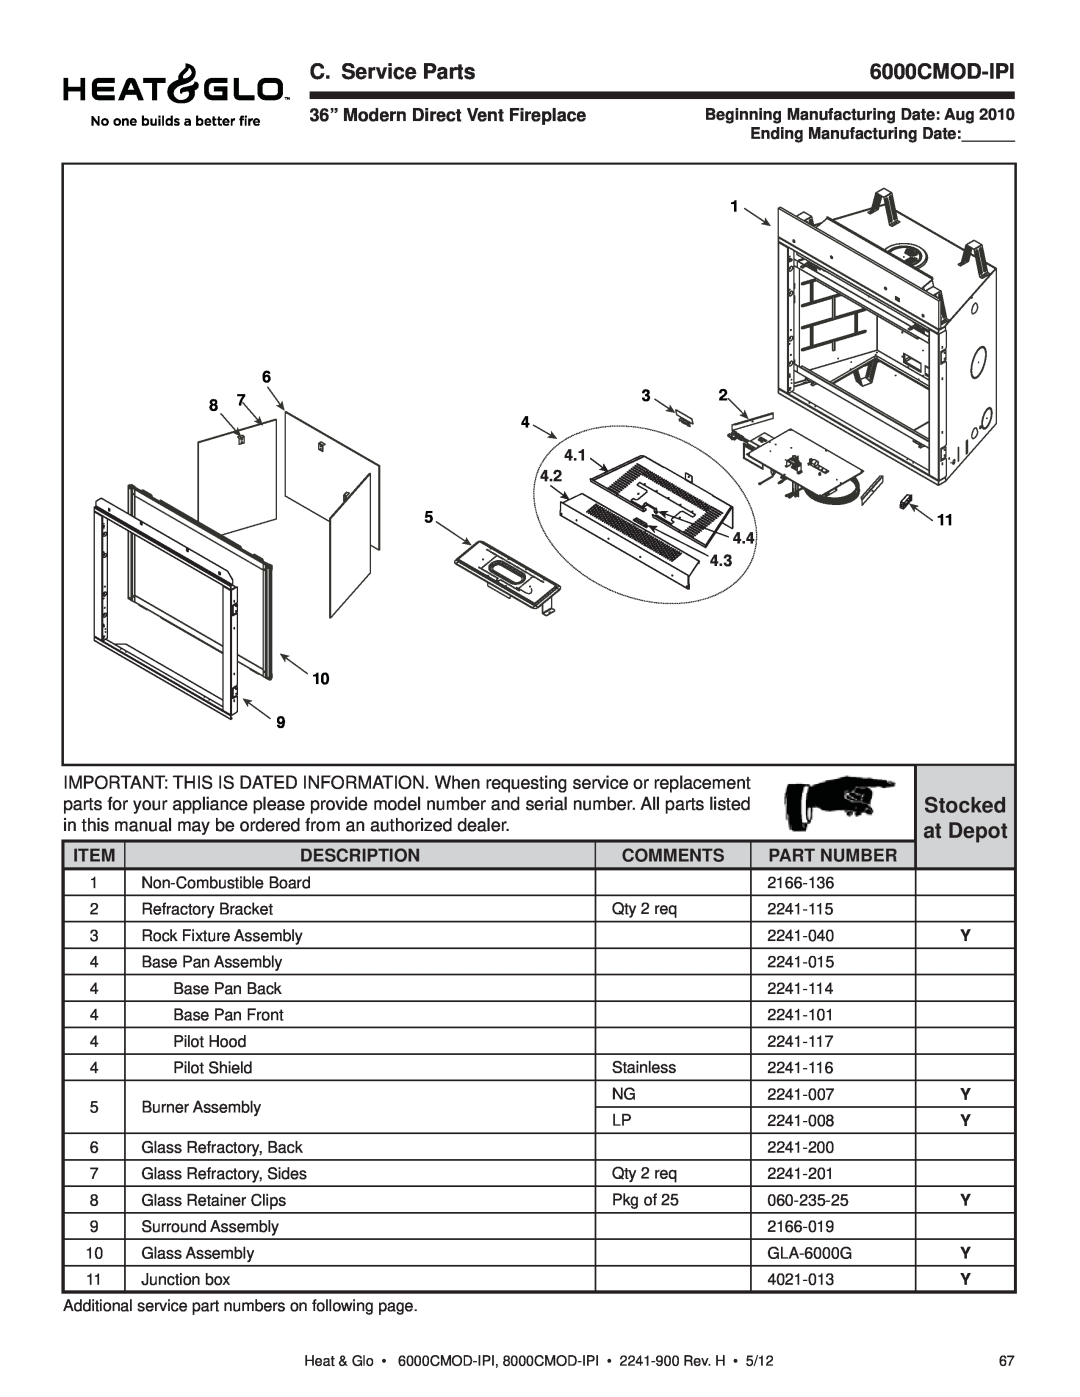 Heat & Glo LifeStyle 6000CMOD-IPI C. Service Parts, Stocked, at Depot, 36” Modern Direct Vent Fireplace, Item, Description 